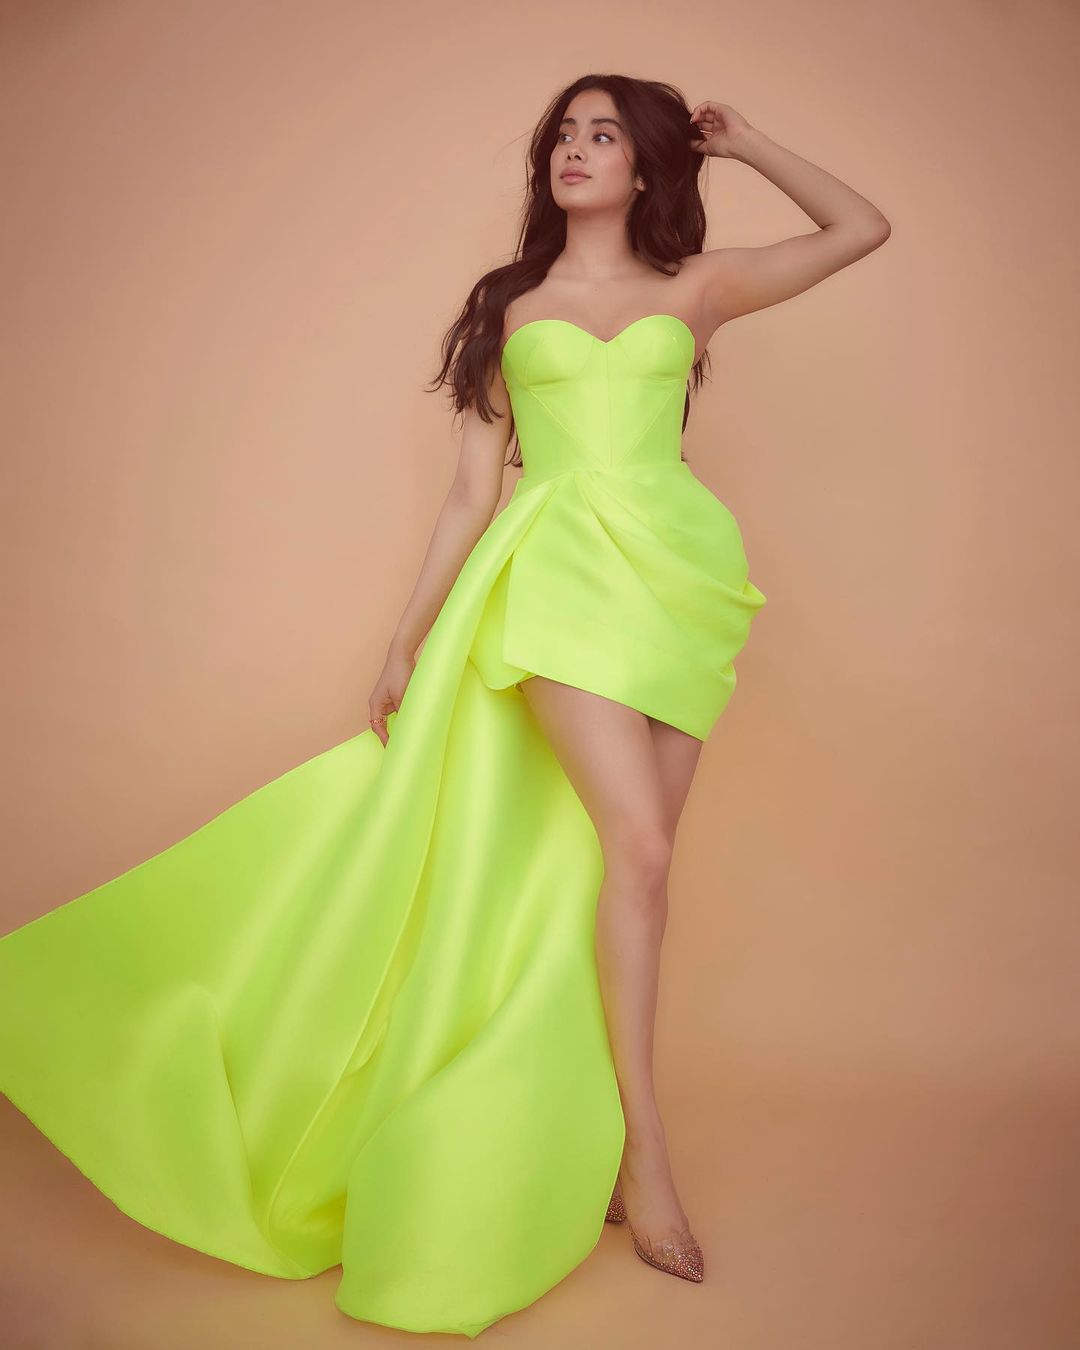 Janhvi Kapoor cuts a statusque figure in the neon green dress. 